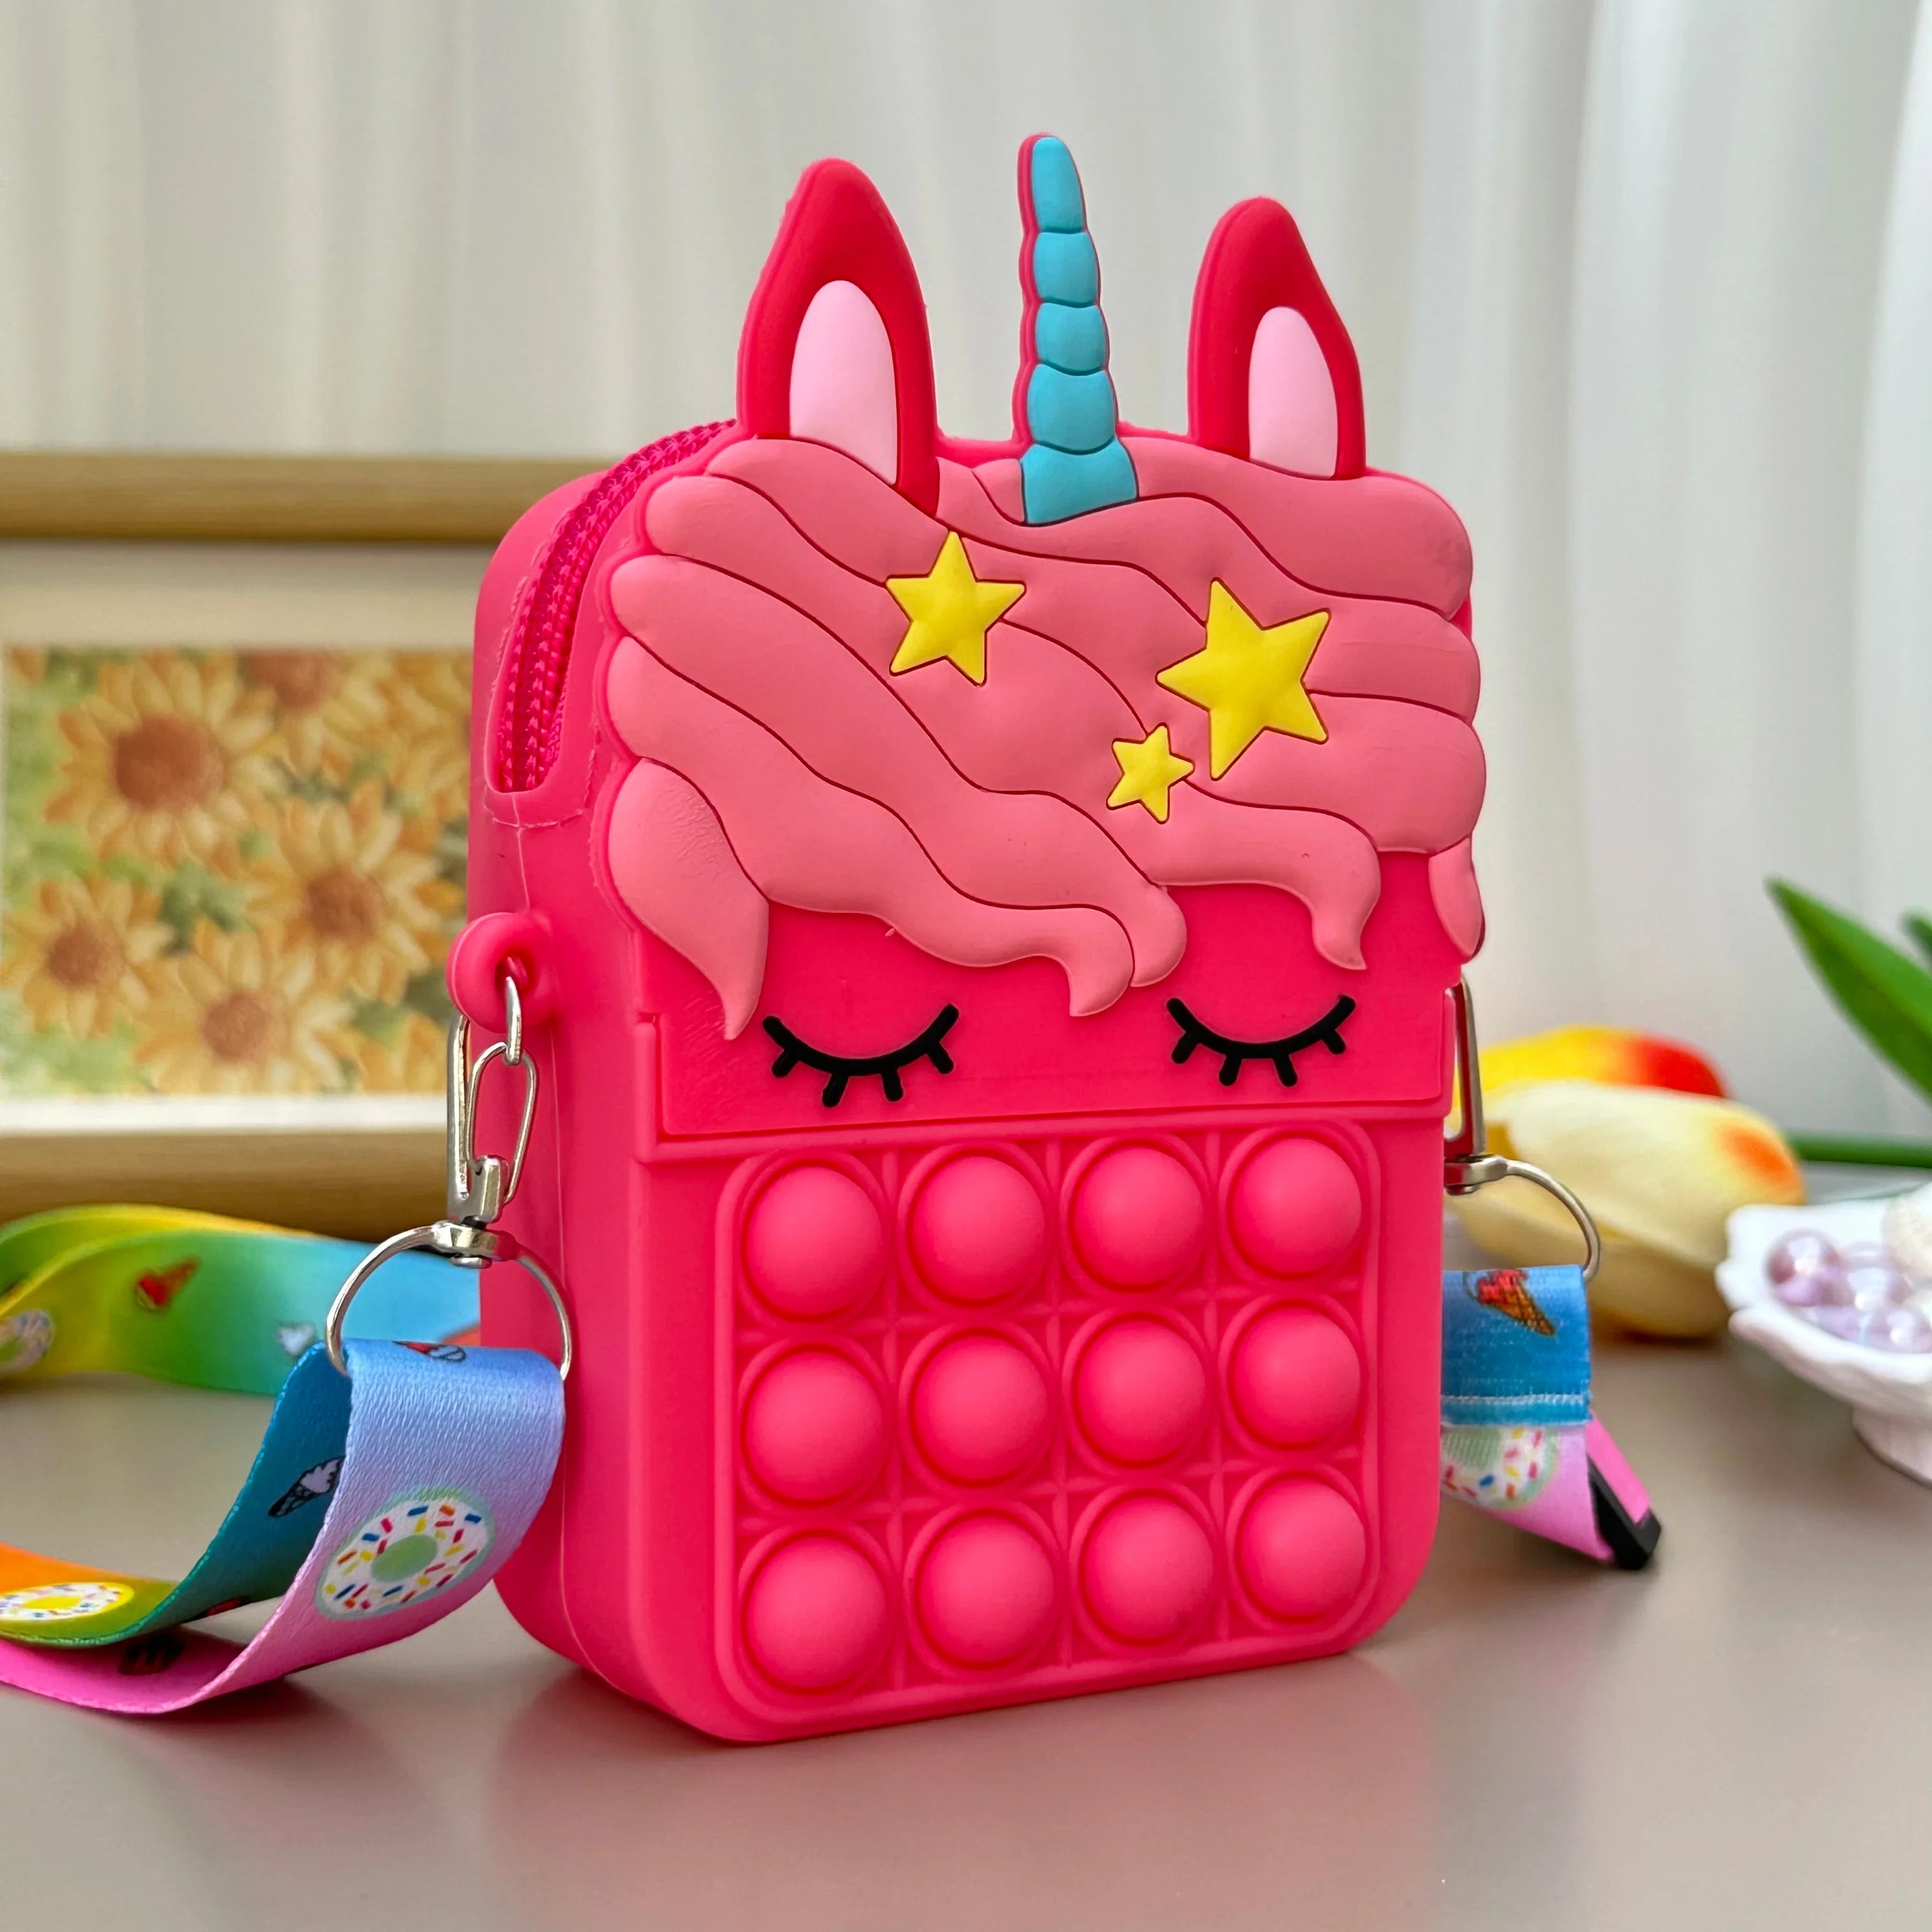 O Brinquedo® - Unicórnio Bag™ - Bolsa de Silicone Pop It